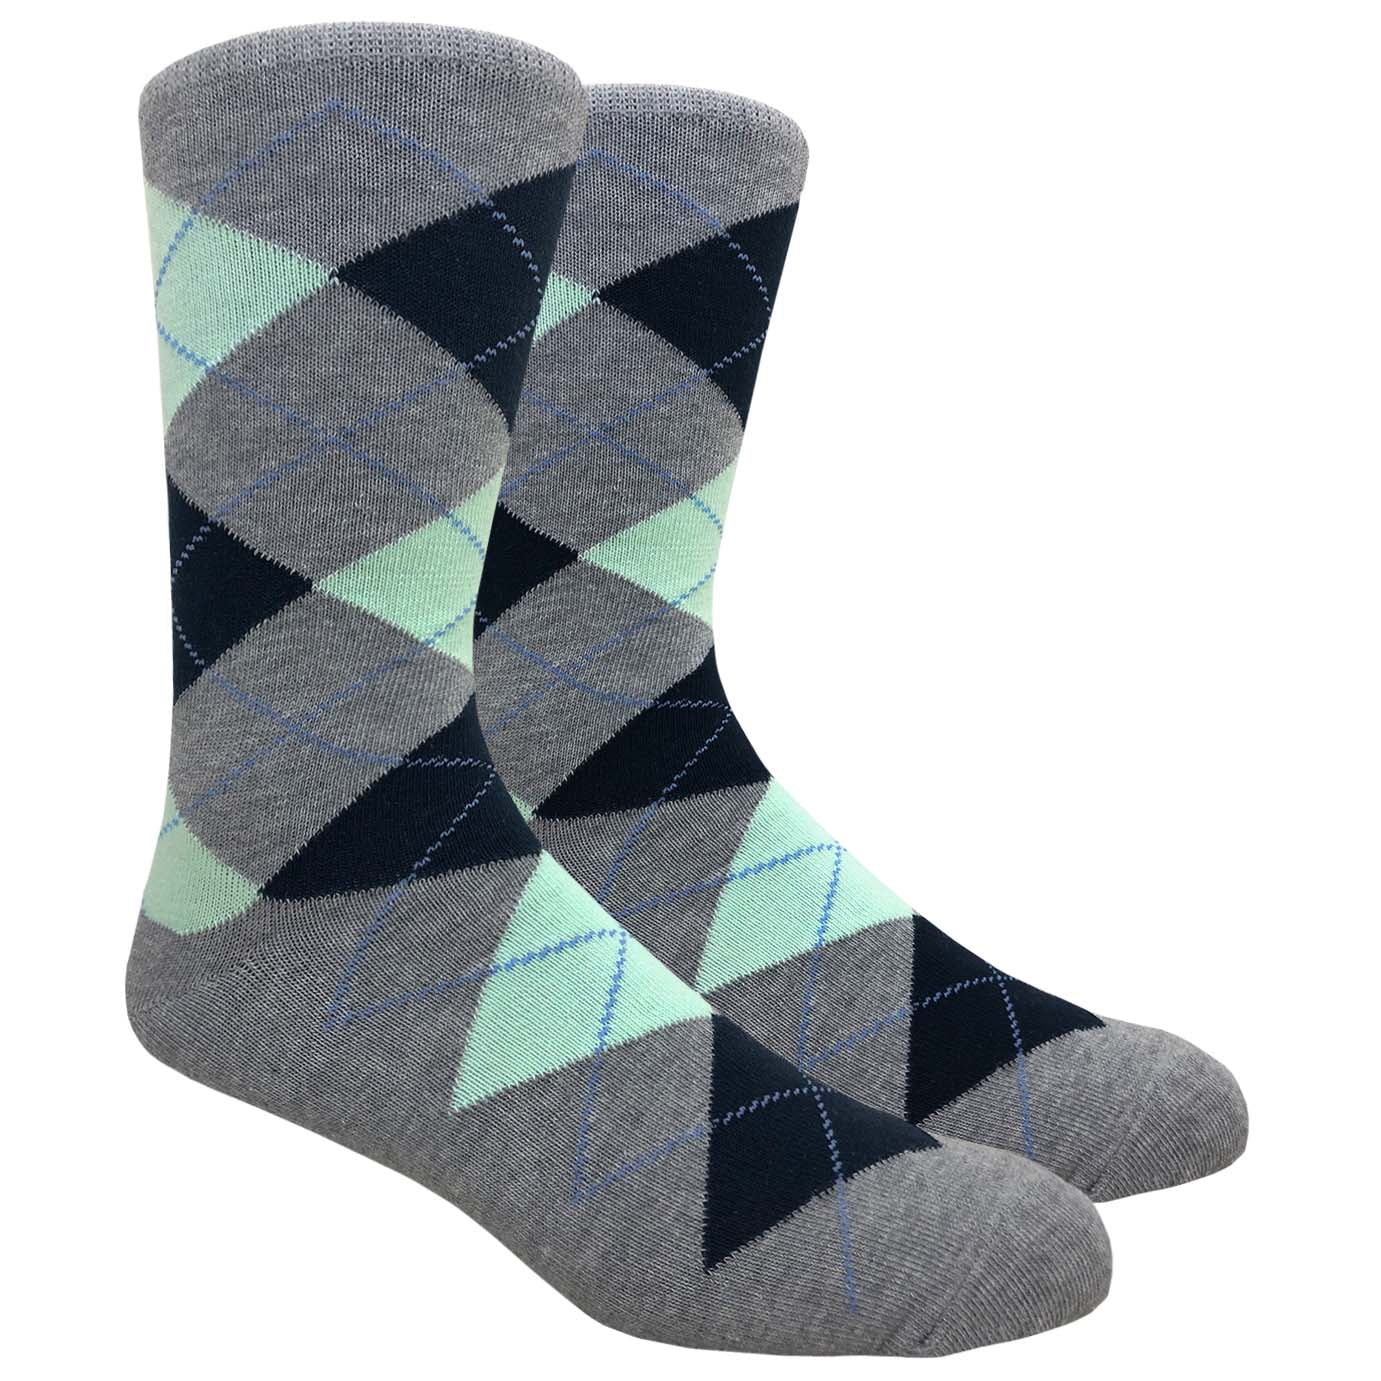 FineFit Black Label Argyle Socks - Heather Grey